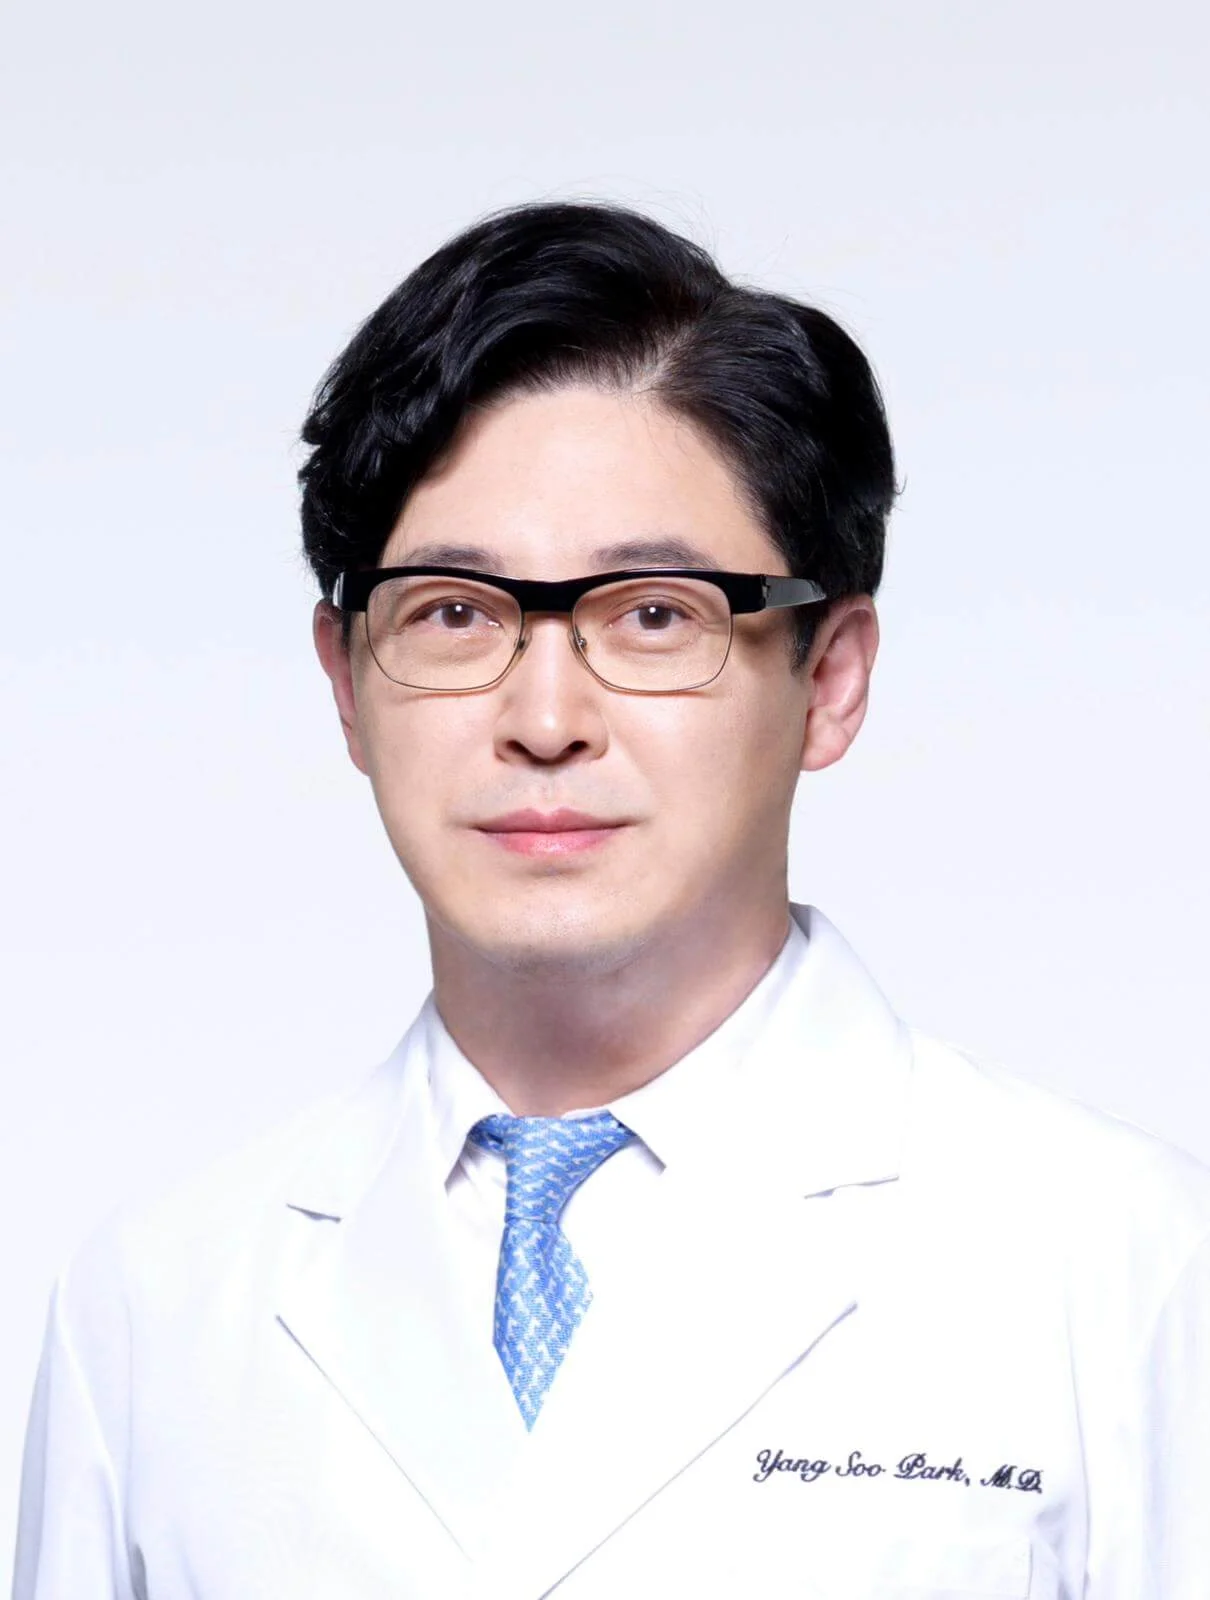 Professor Dr. Tony Yang Soo Park